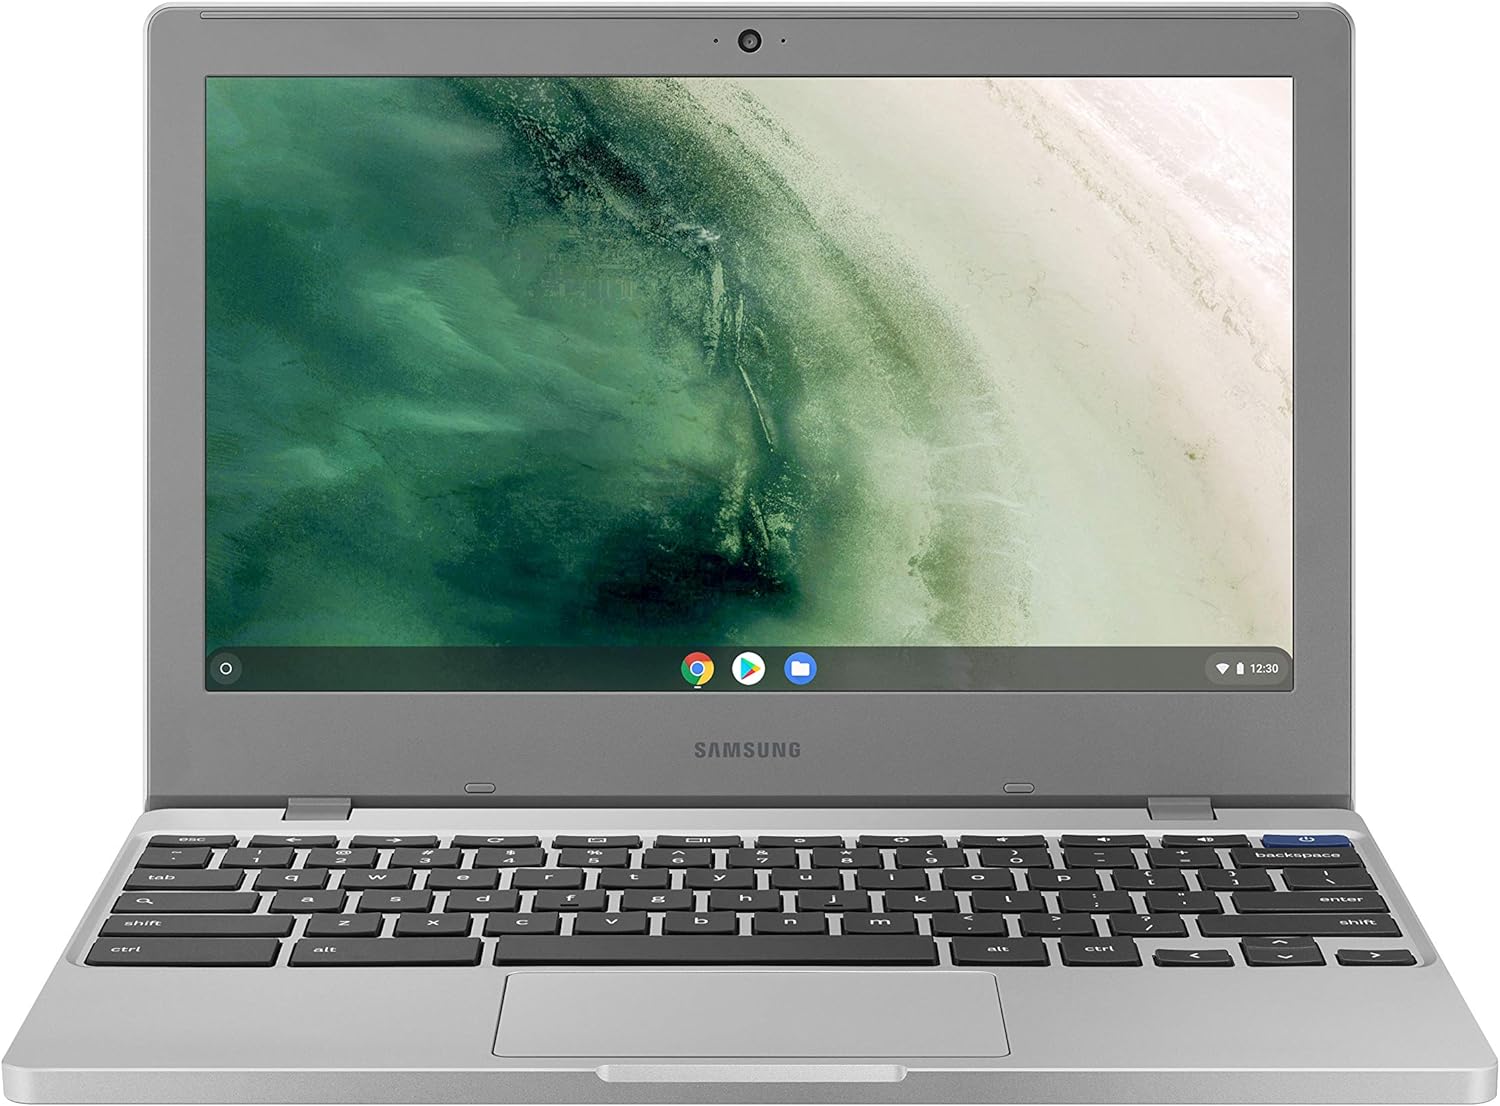 Samsung XE310XBAK02US Chromebook 4 11.6-Inch Laptop